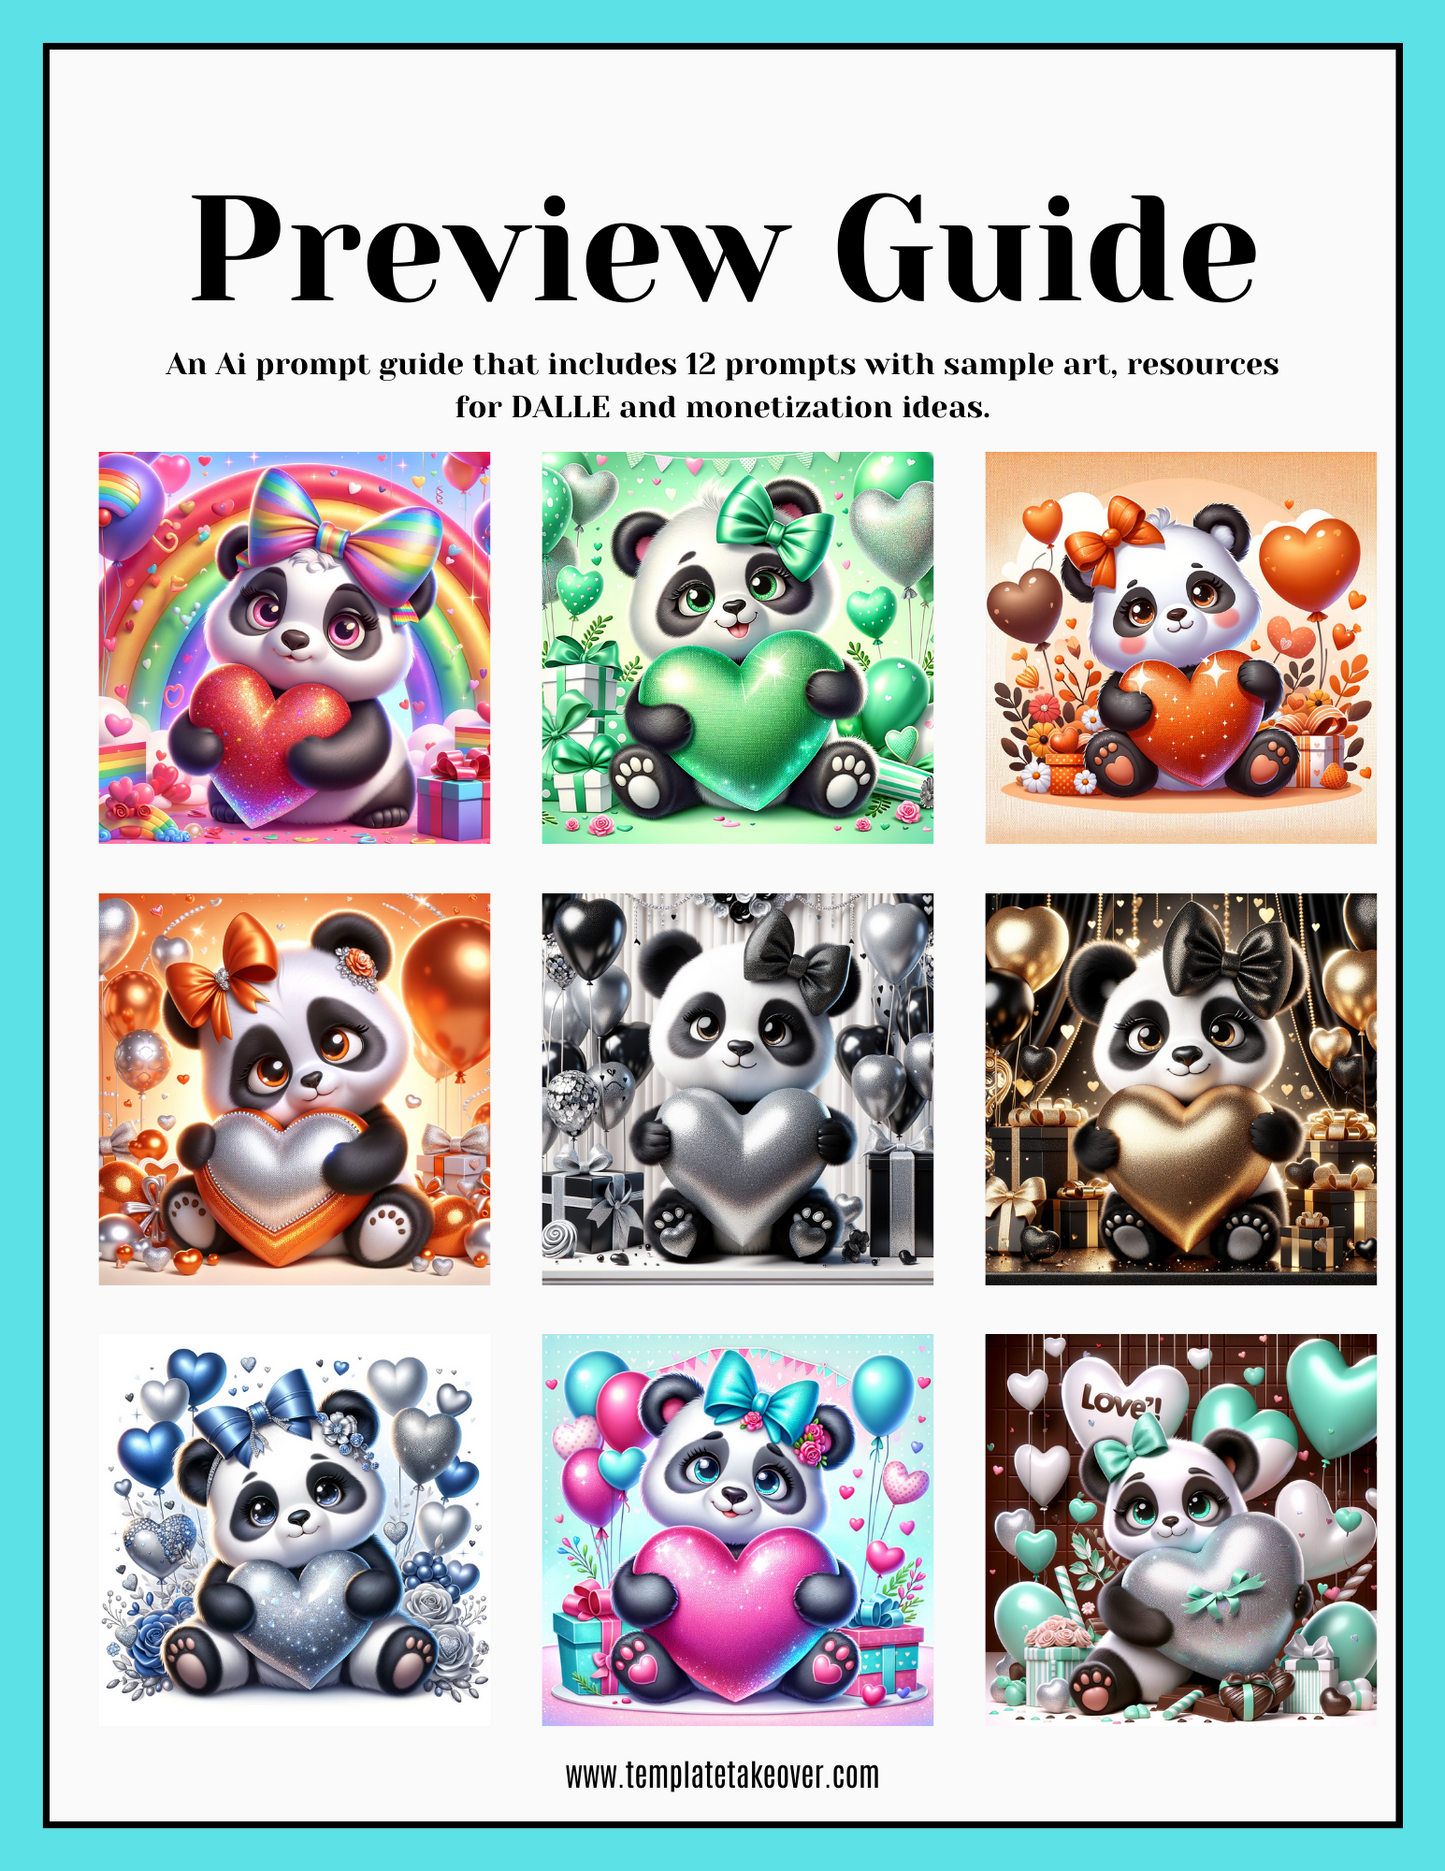 "Heartfelt Hugs: The Enchanted Panda Collection 2." Prompt Guide!